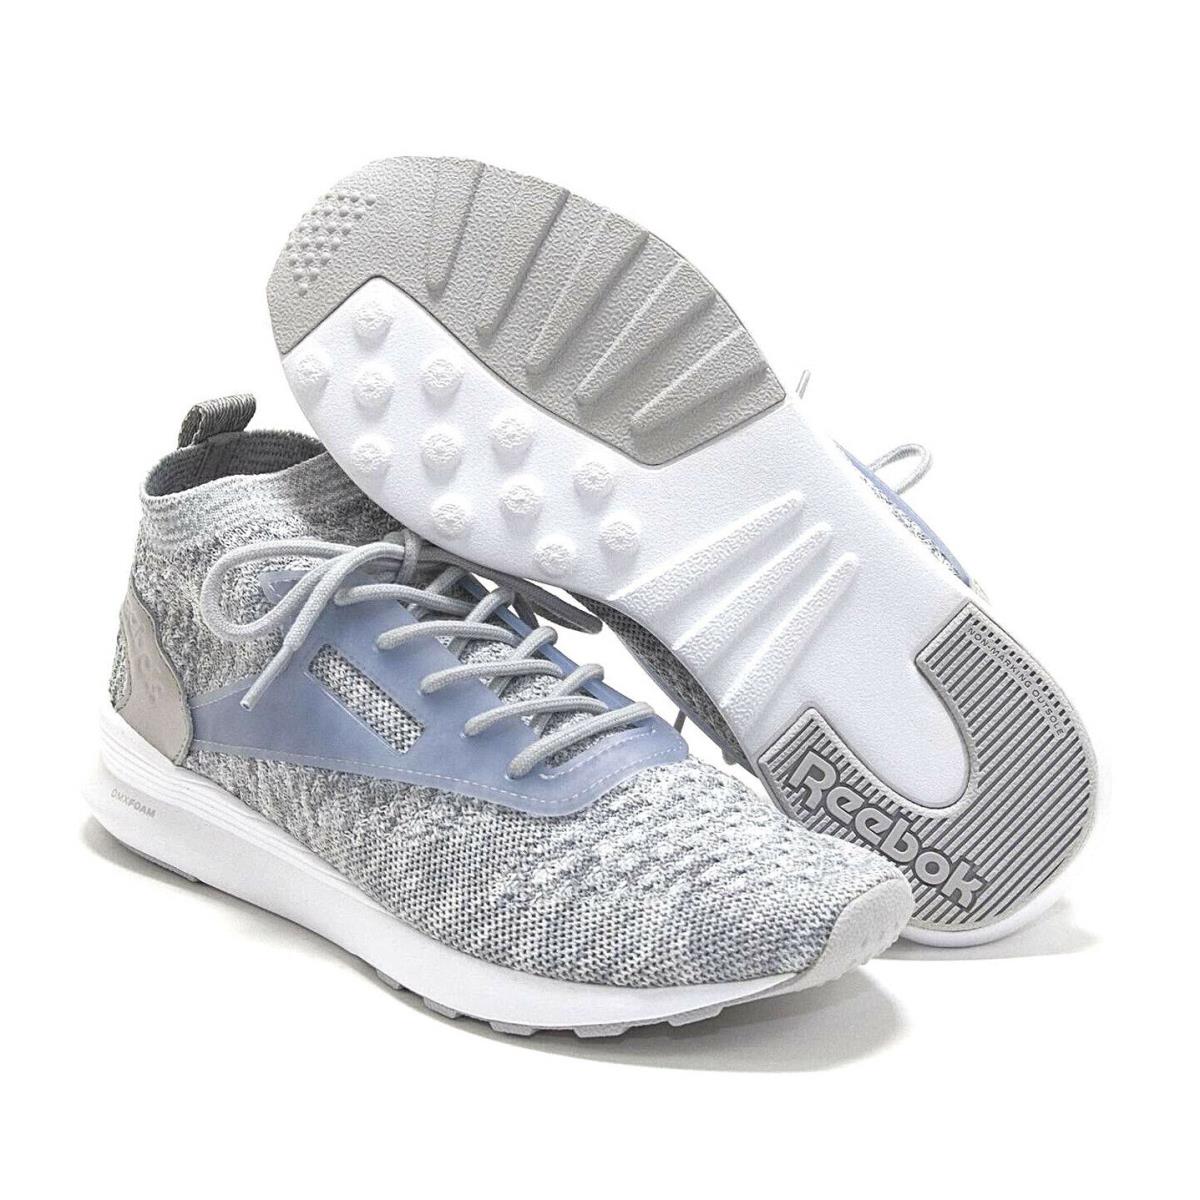 Men Reebok Zoku Runner Ultraknit Heather Grey Running Shoes Sneakers BD5488